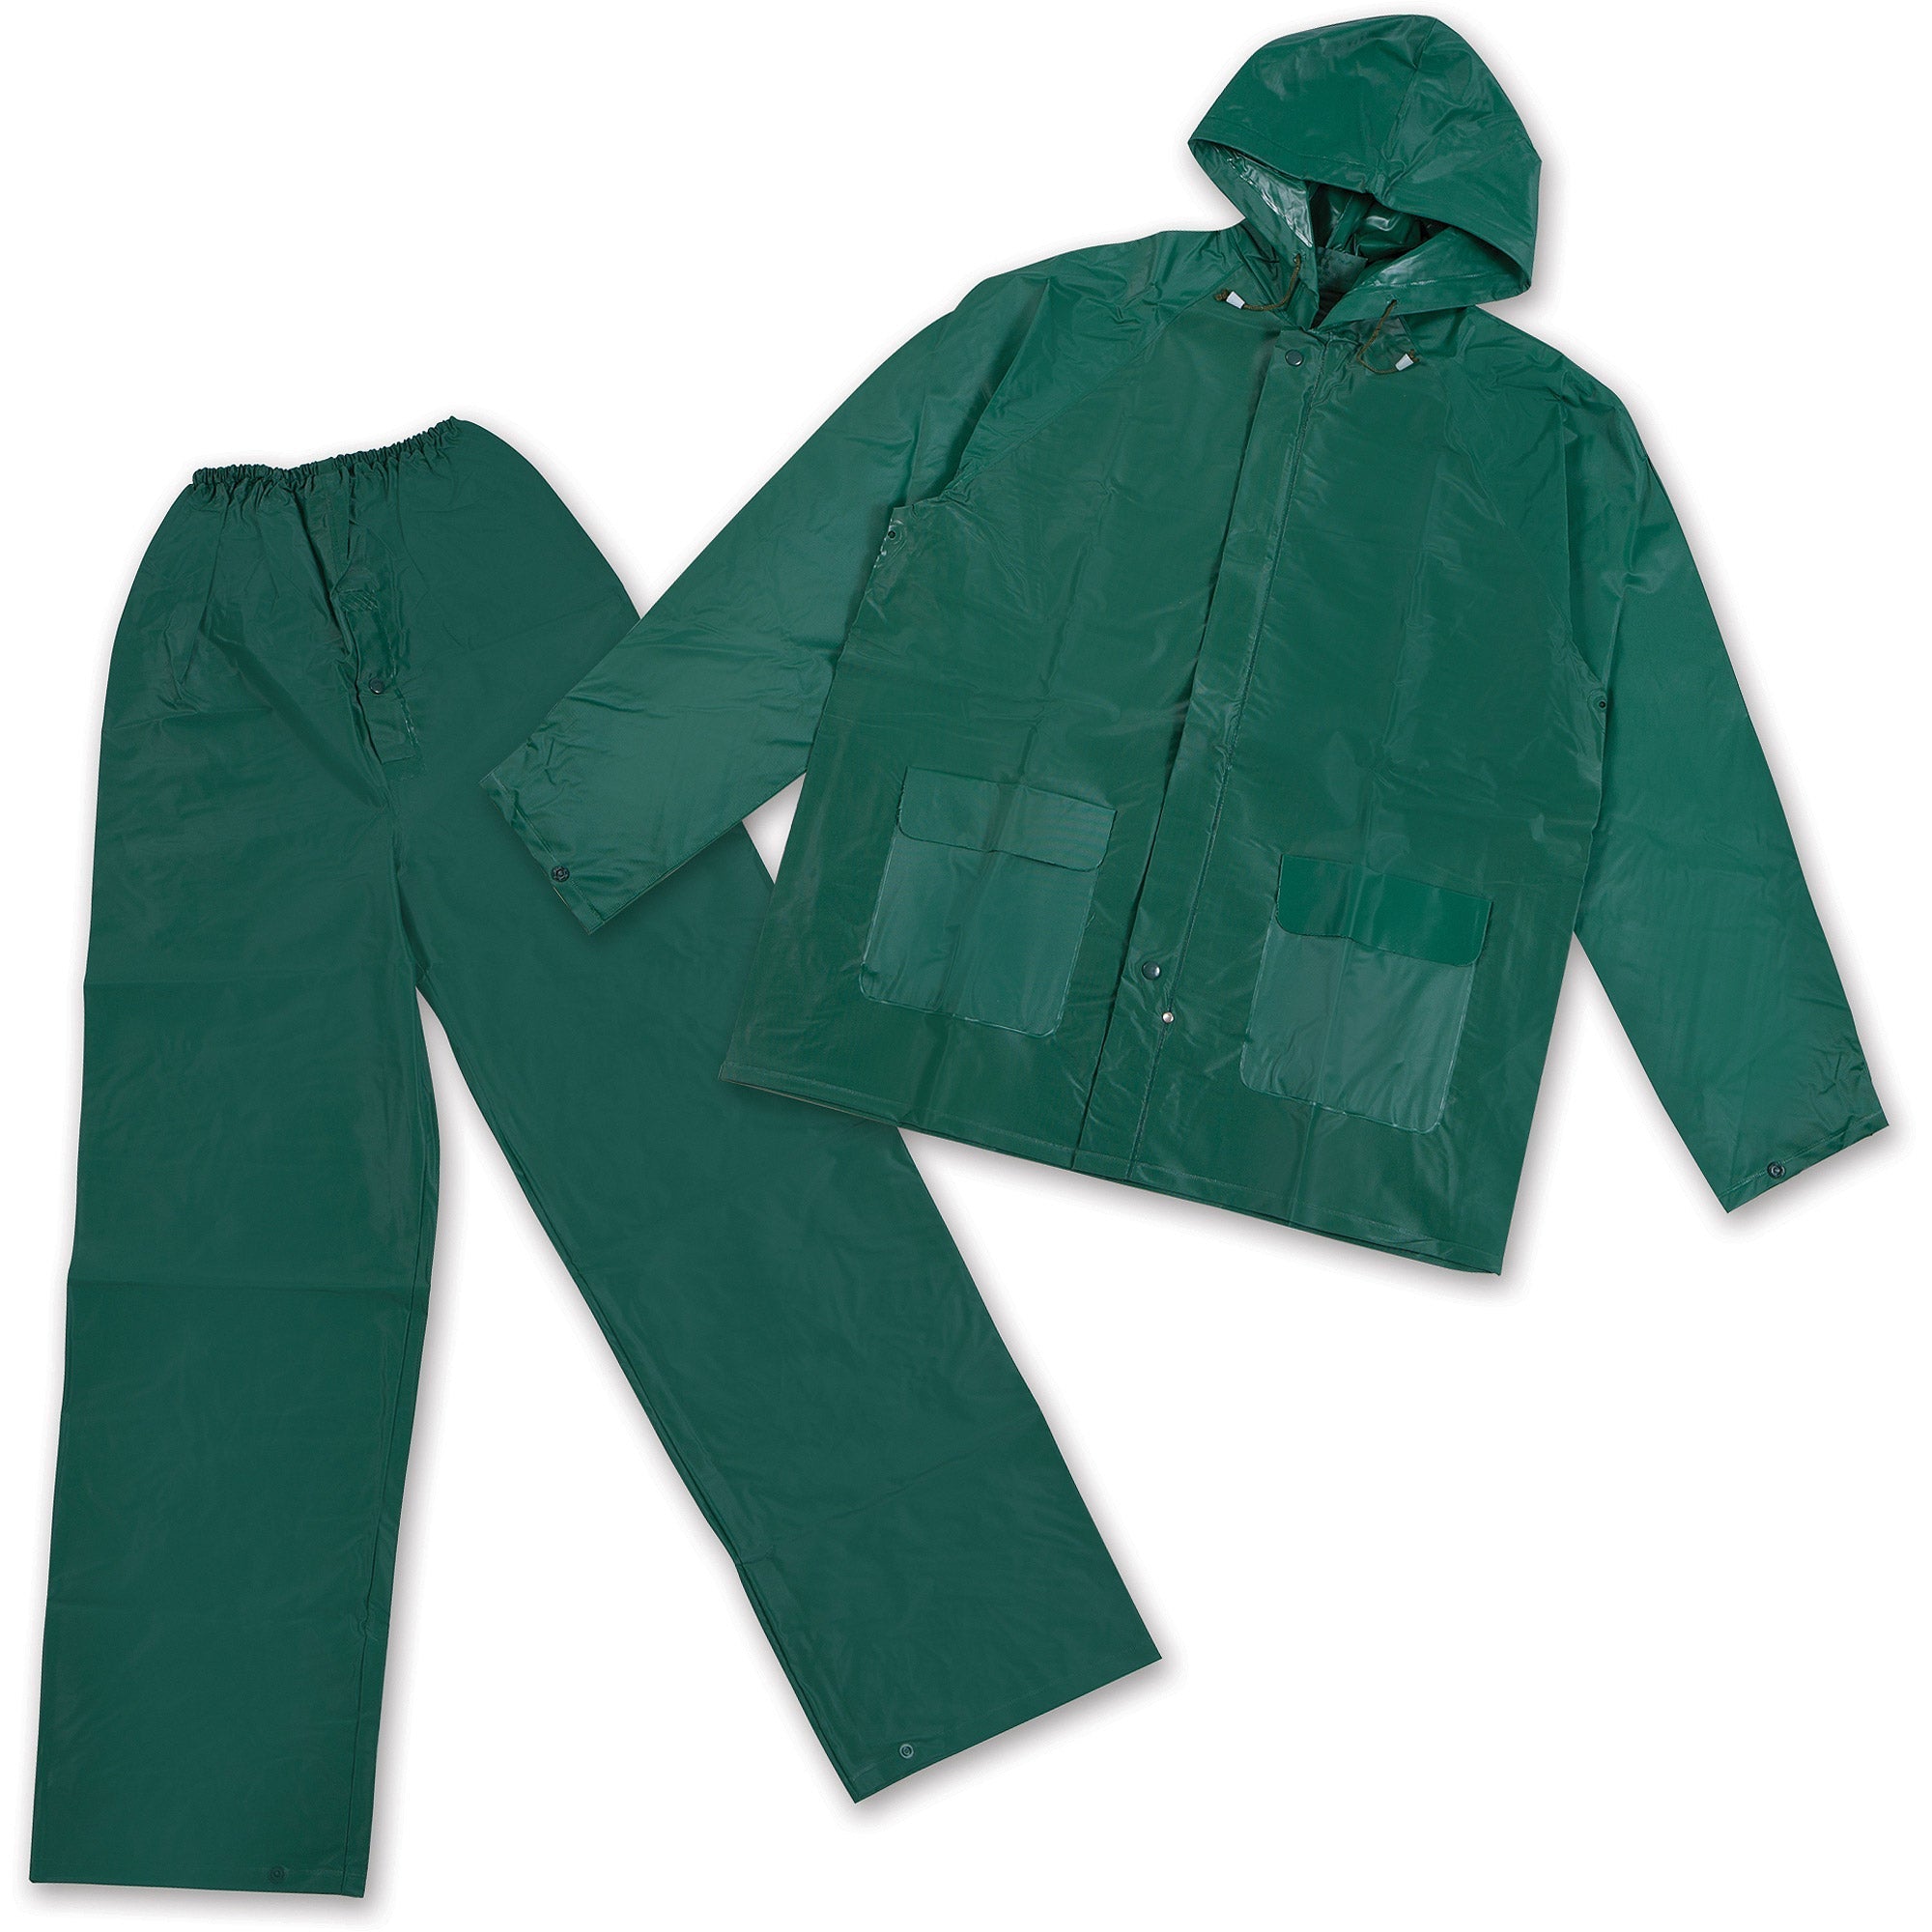 Mens Vinyl Rainsuit - Green - Small